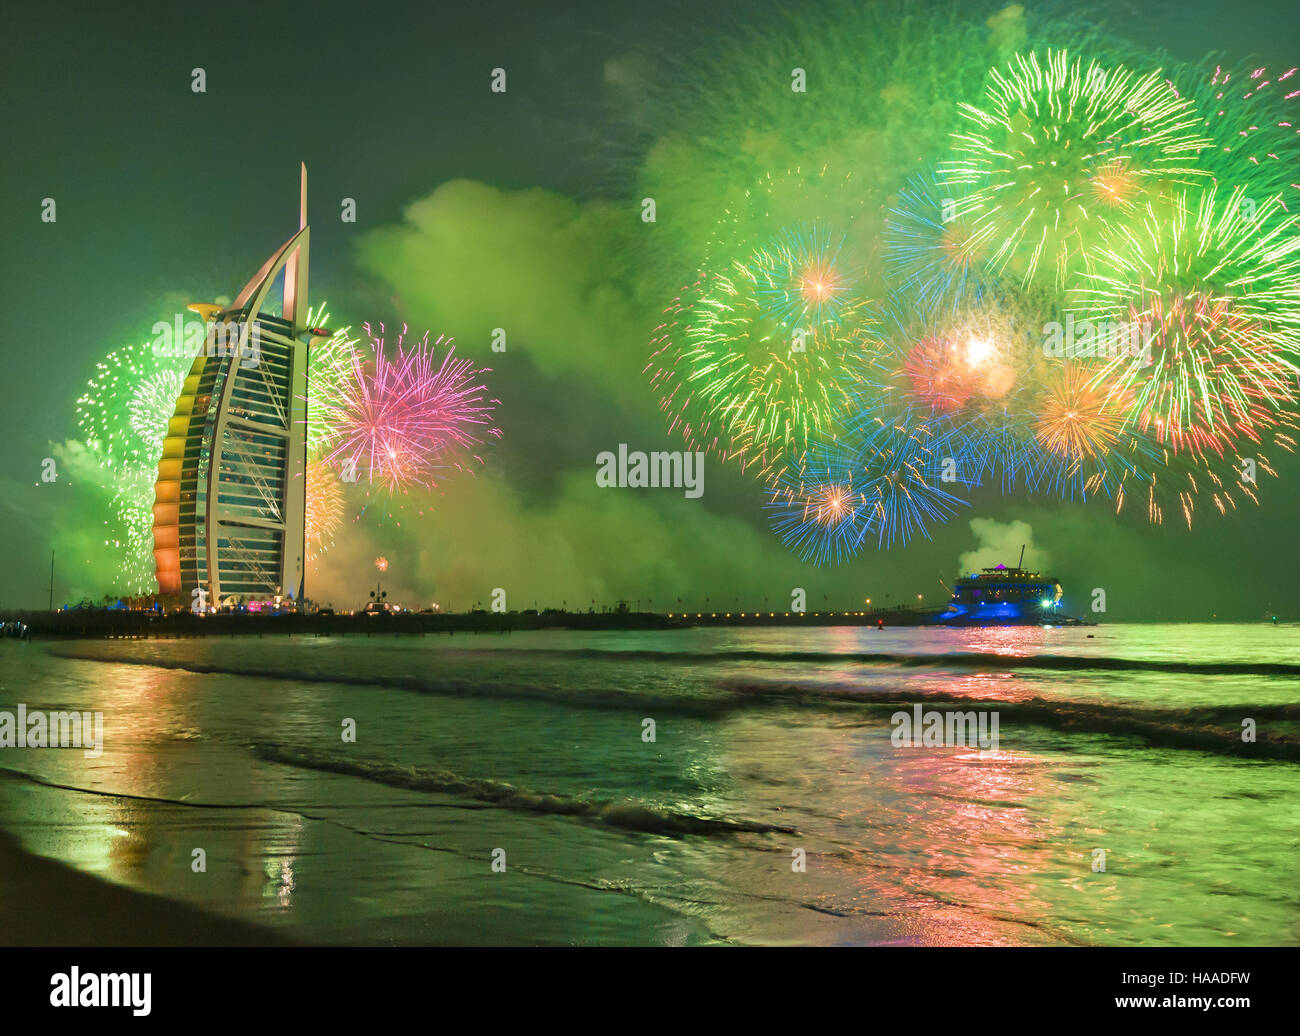 Burj Al Arab in Dubai Jumeirah Beach celebarating the new year eve Stock Photo